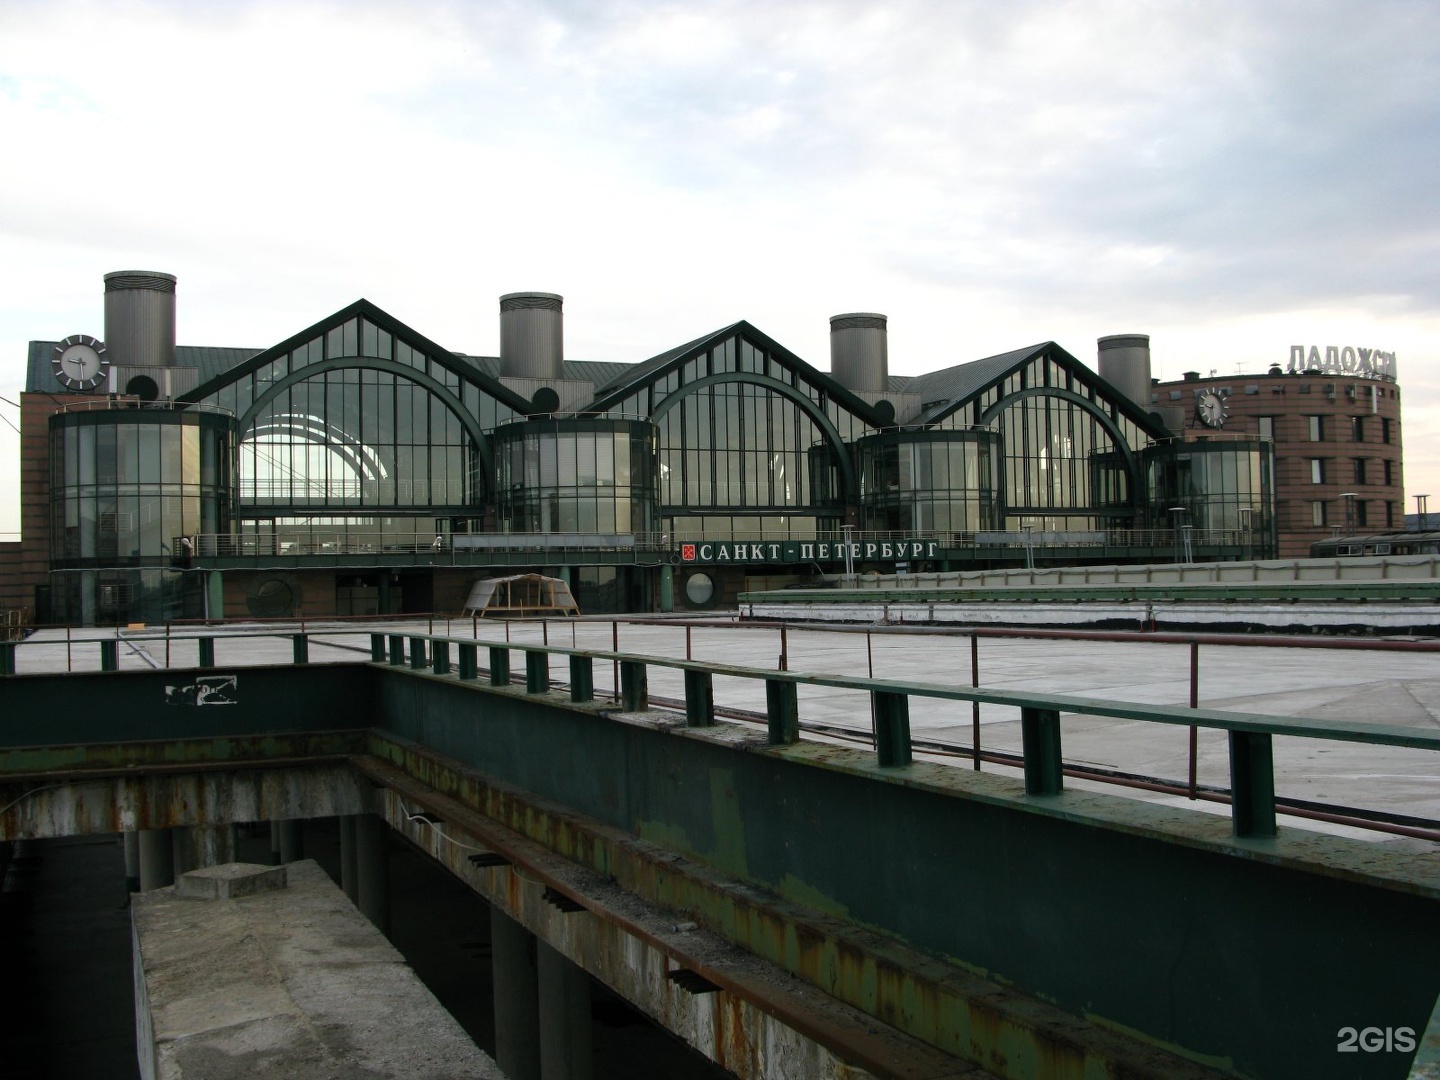 Ладожский вокзал Питер